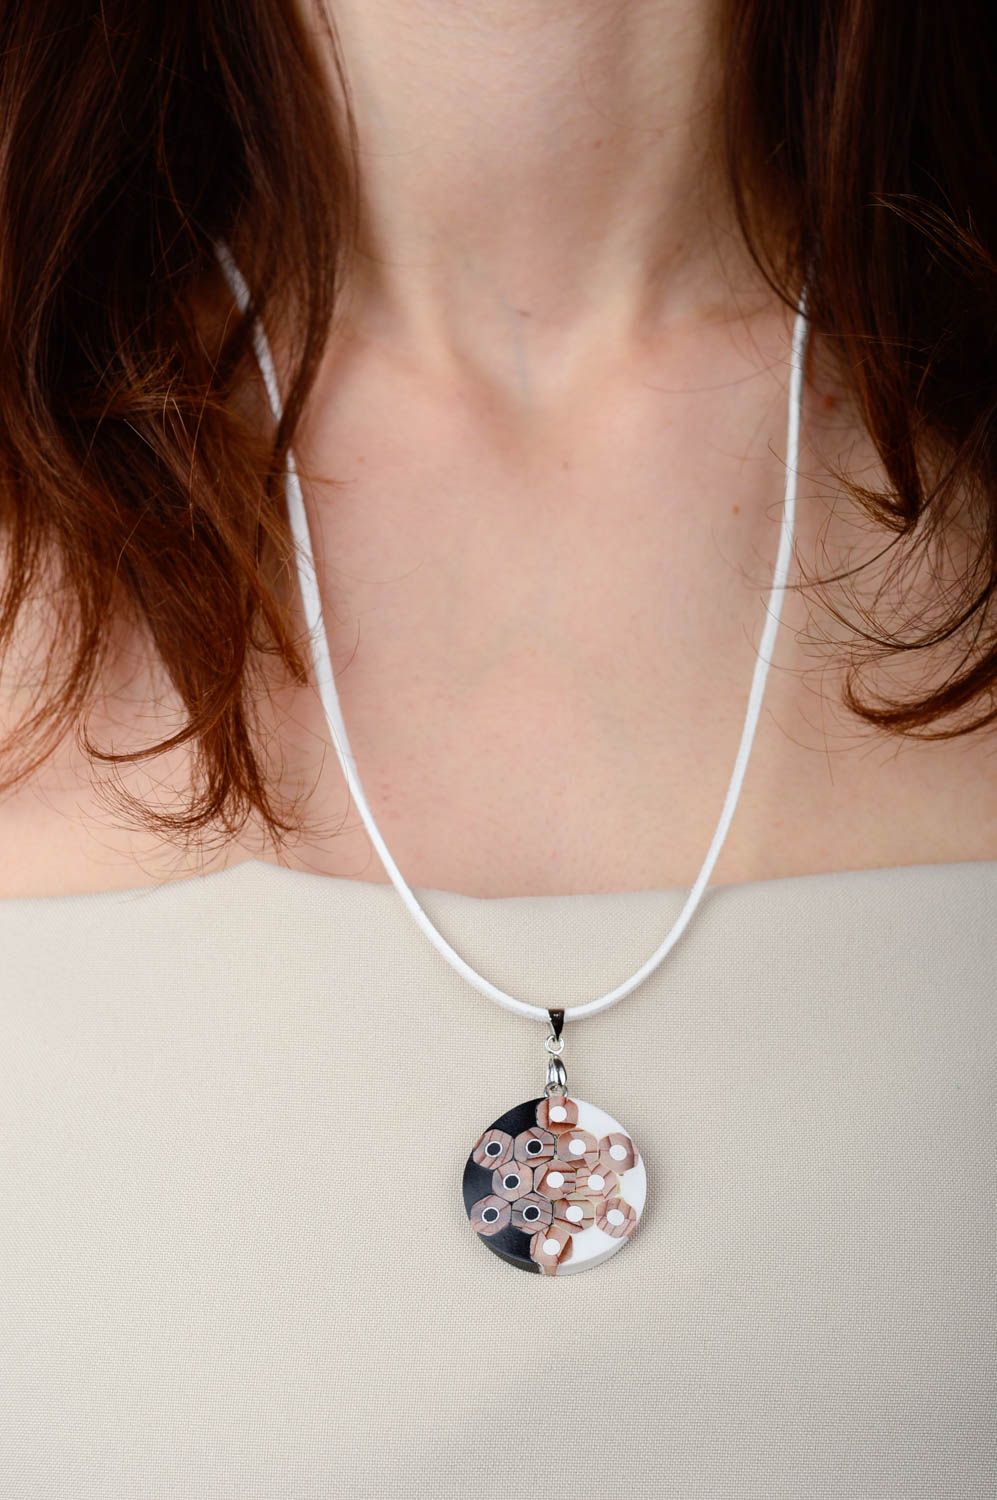 Handmade pendant unusual gift designer jewelry wooden pendant gift for her photo 2